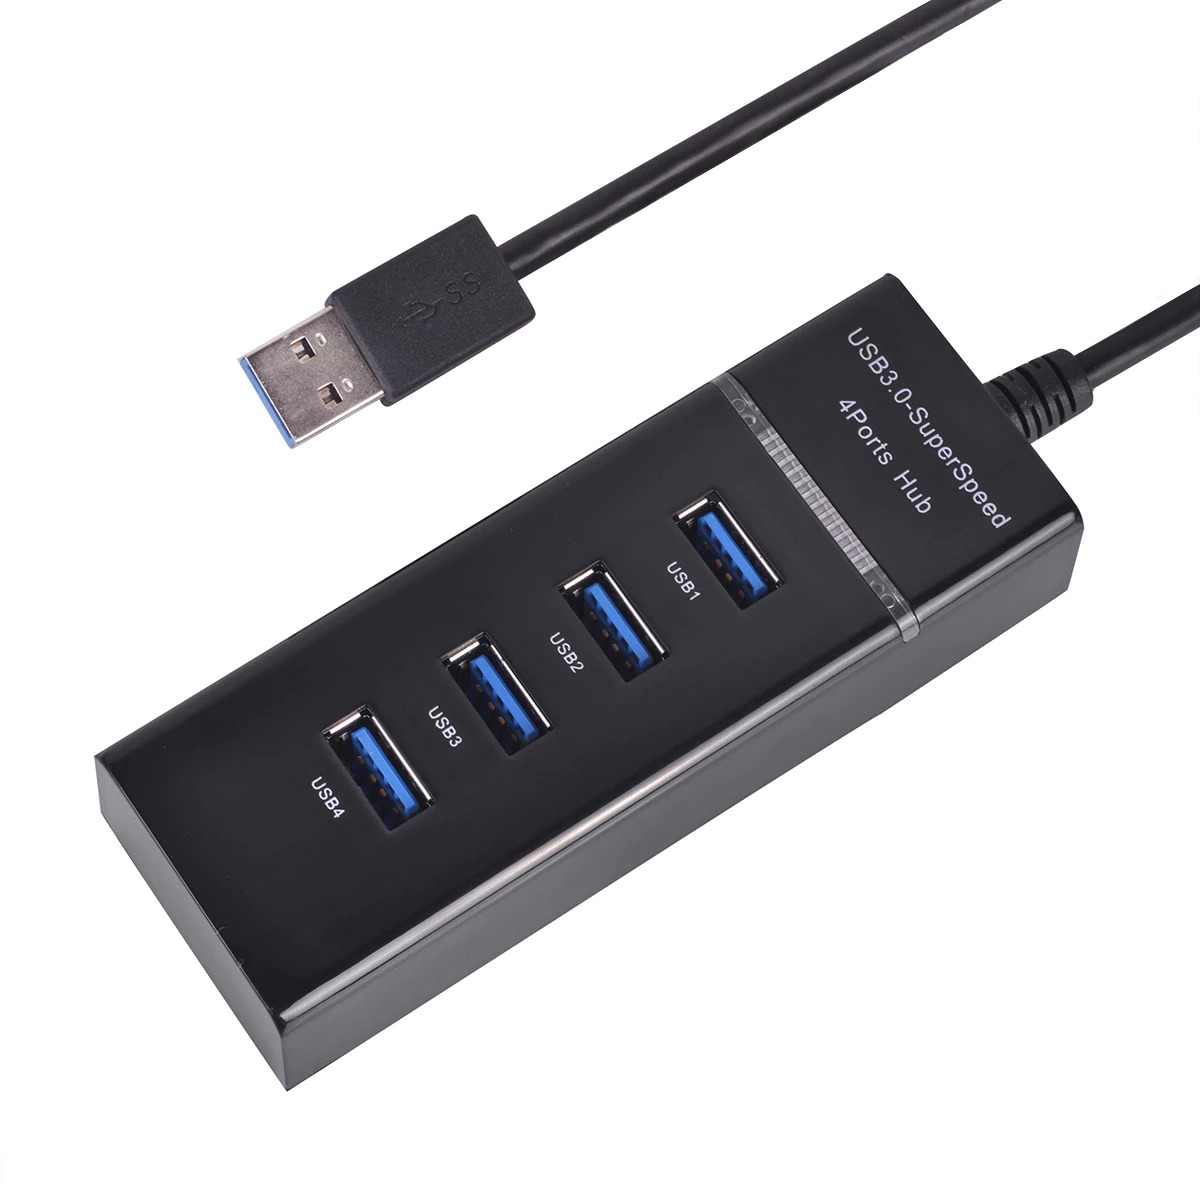 Cable adaptador / convertidor USB 3.0 a HDMI 1080p - Tecnopura